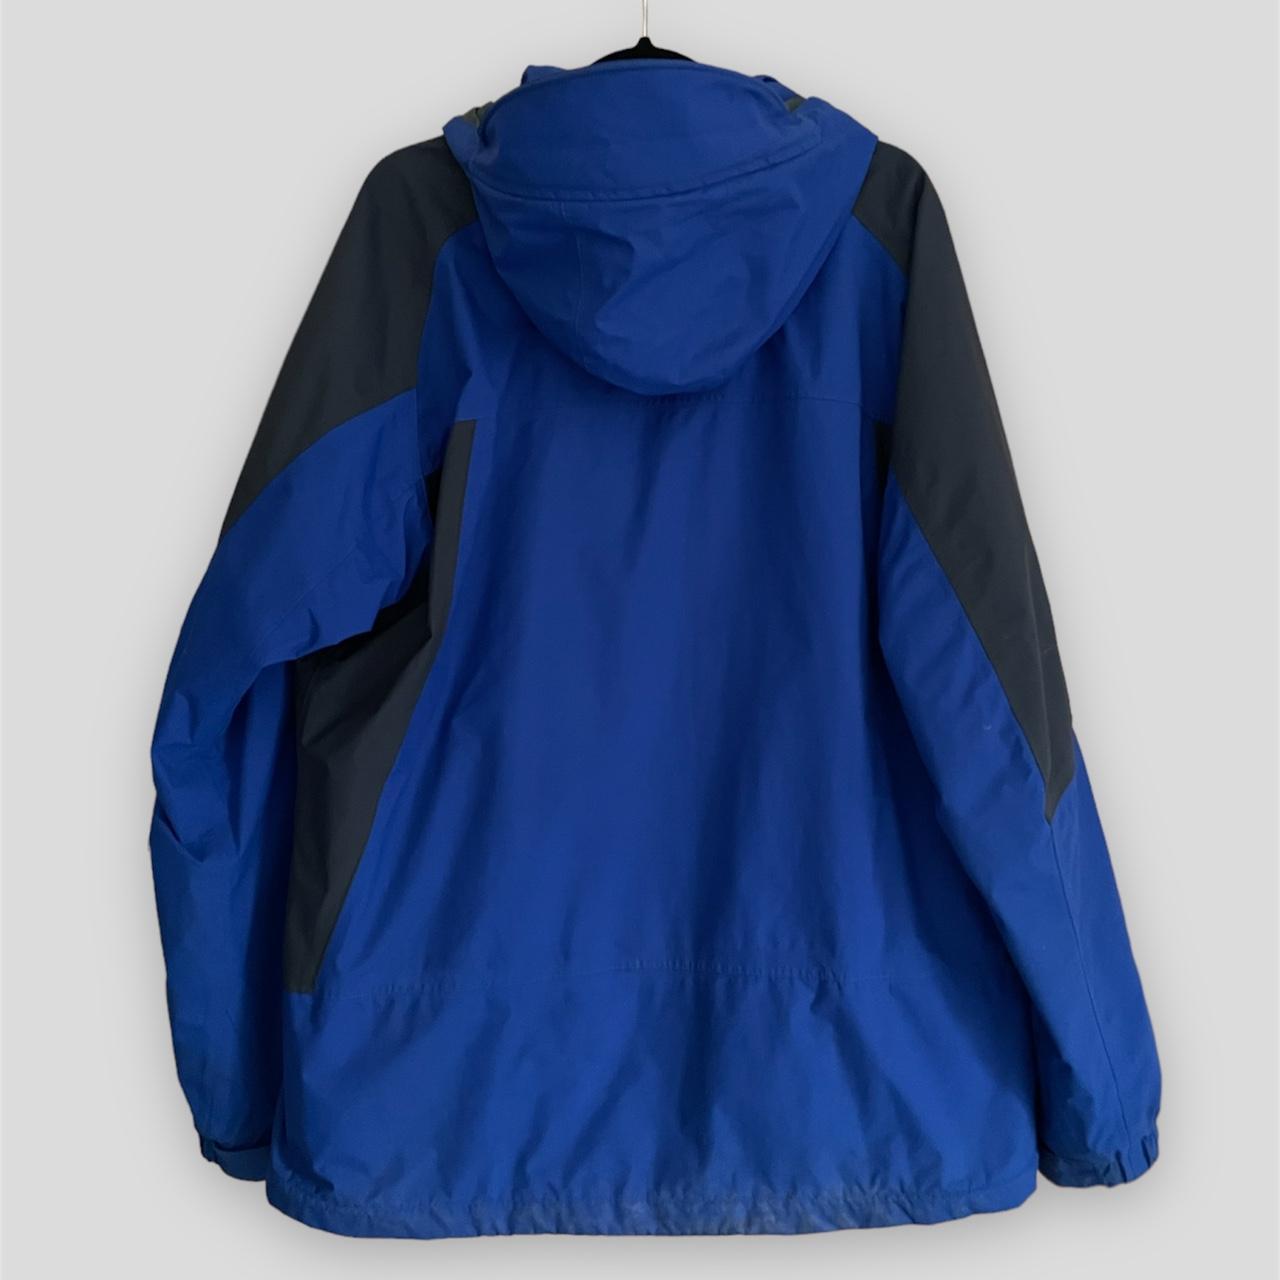 Sprayway Coat in Blue and Black Very practical and... - Depop